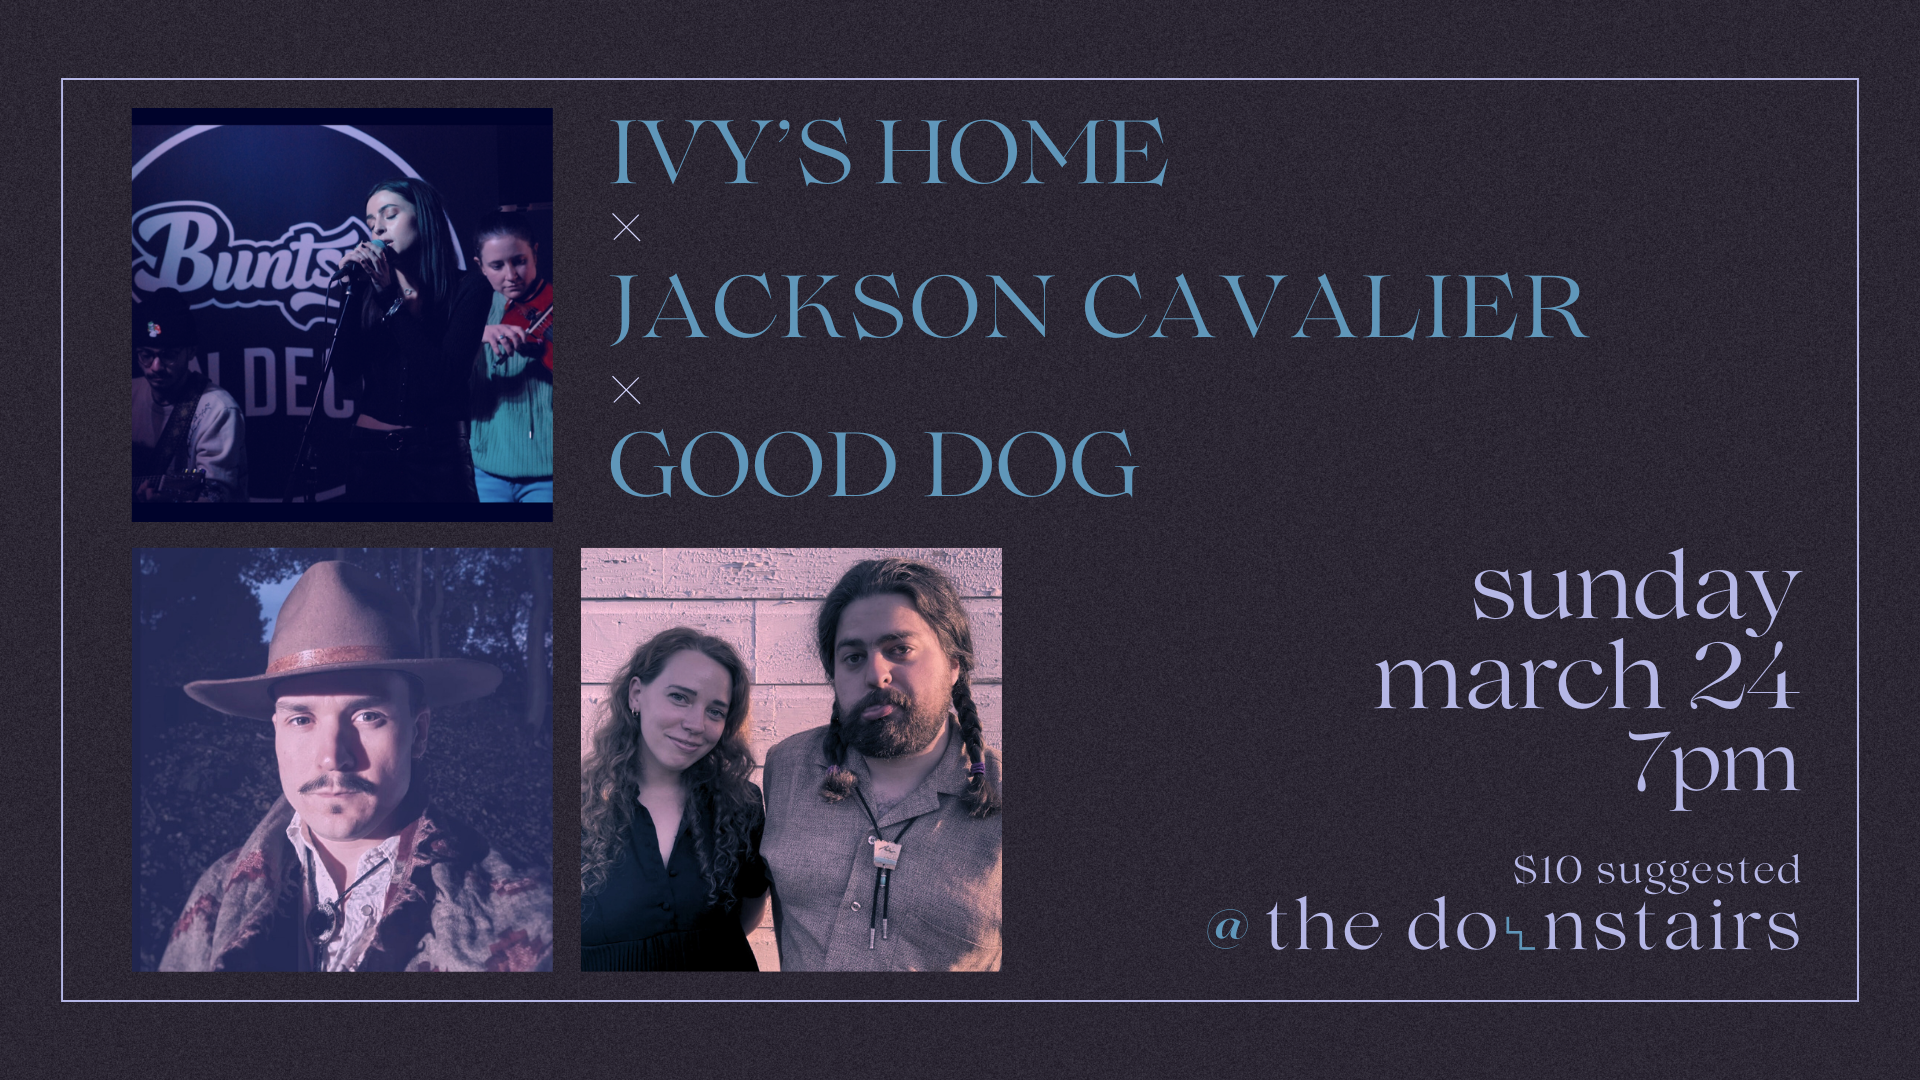 Ivy's Home, Jackson Cavalier & Good Dog